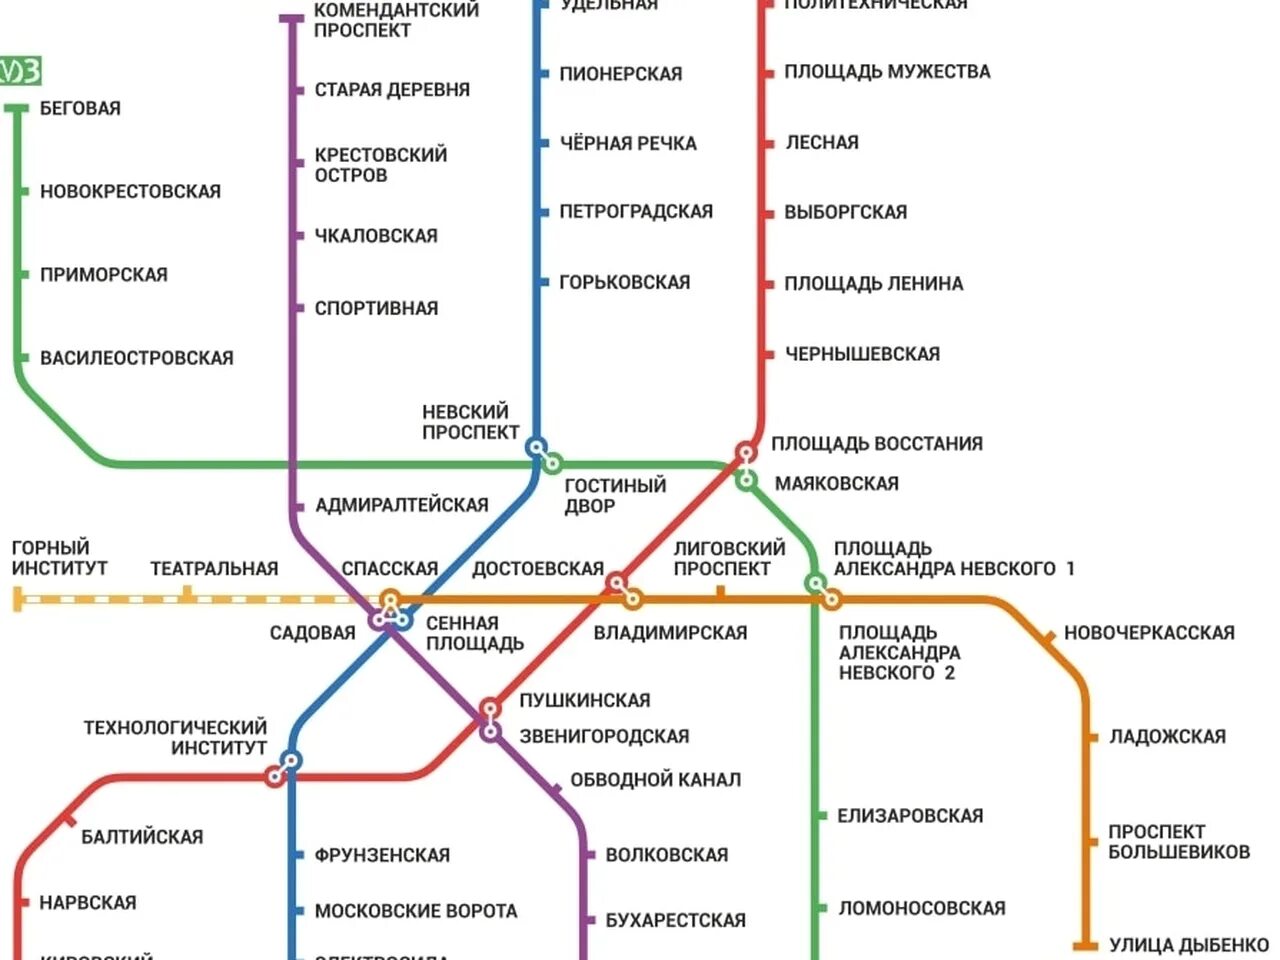 Зеленая ветка метро СПБ станции. Схема метро СПБ зеленая ветка. Ветки метро Санкт-Петербурга 2021. Схема метрополитена СПБ 2021.